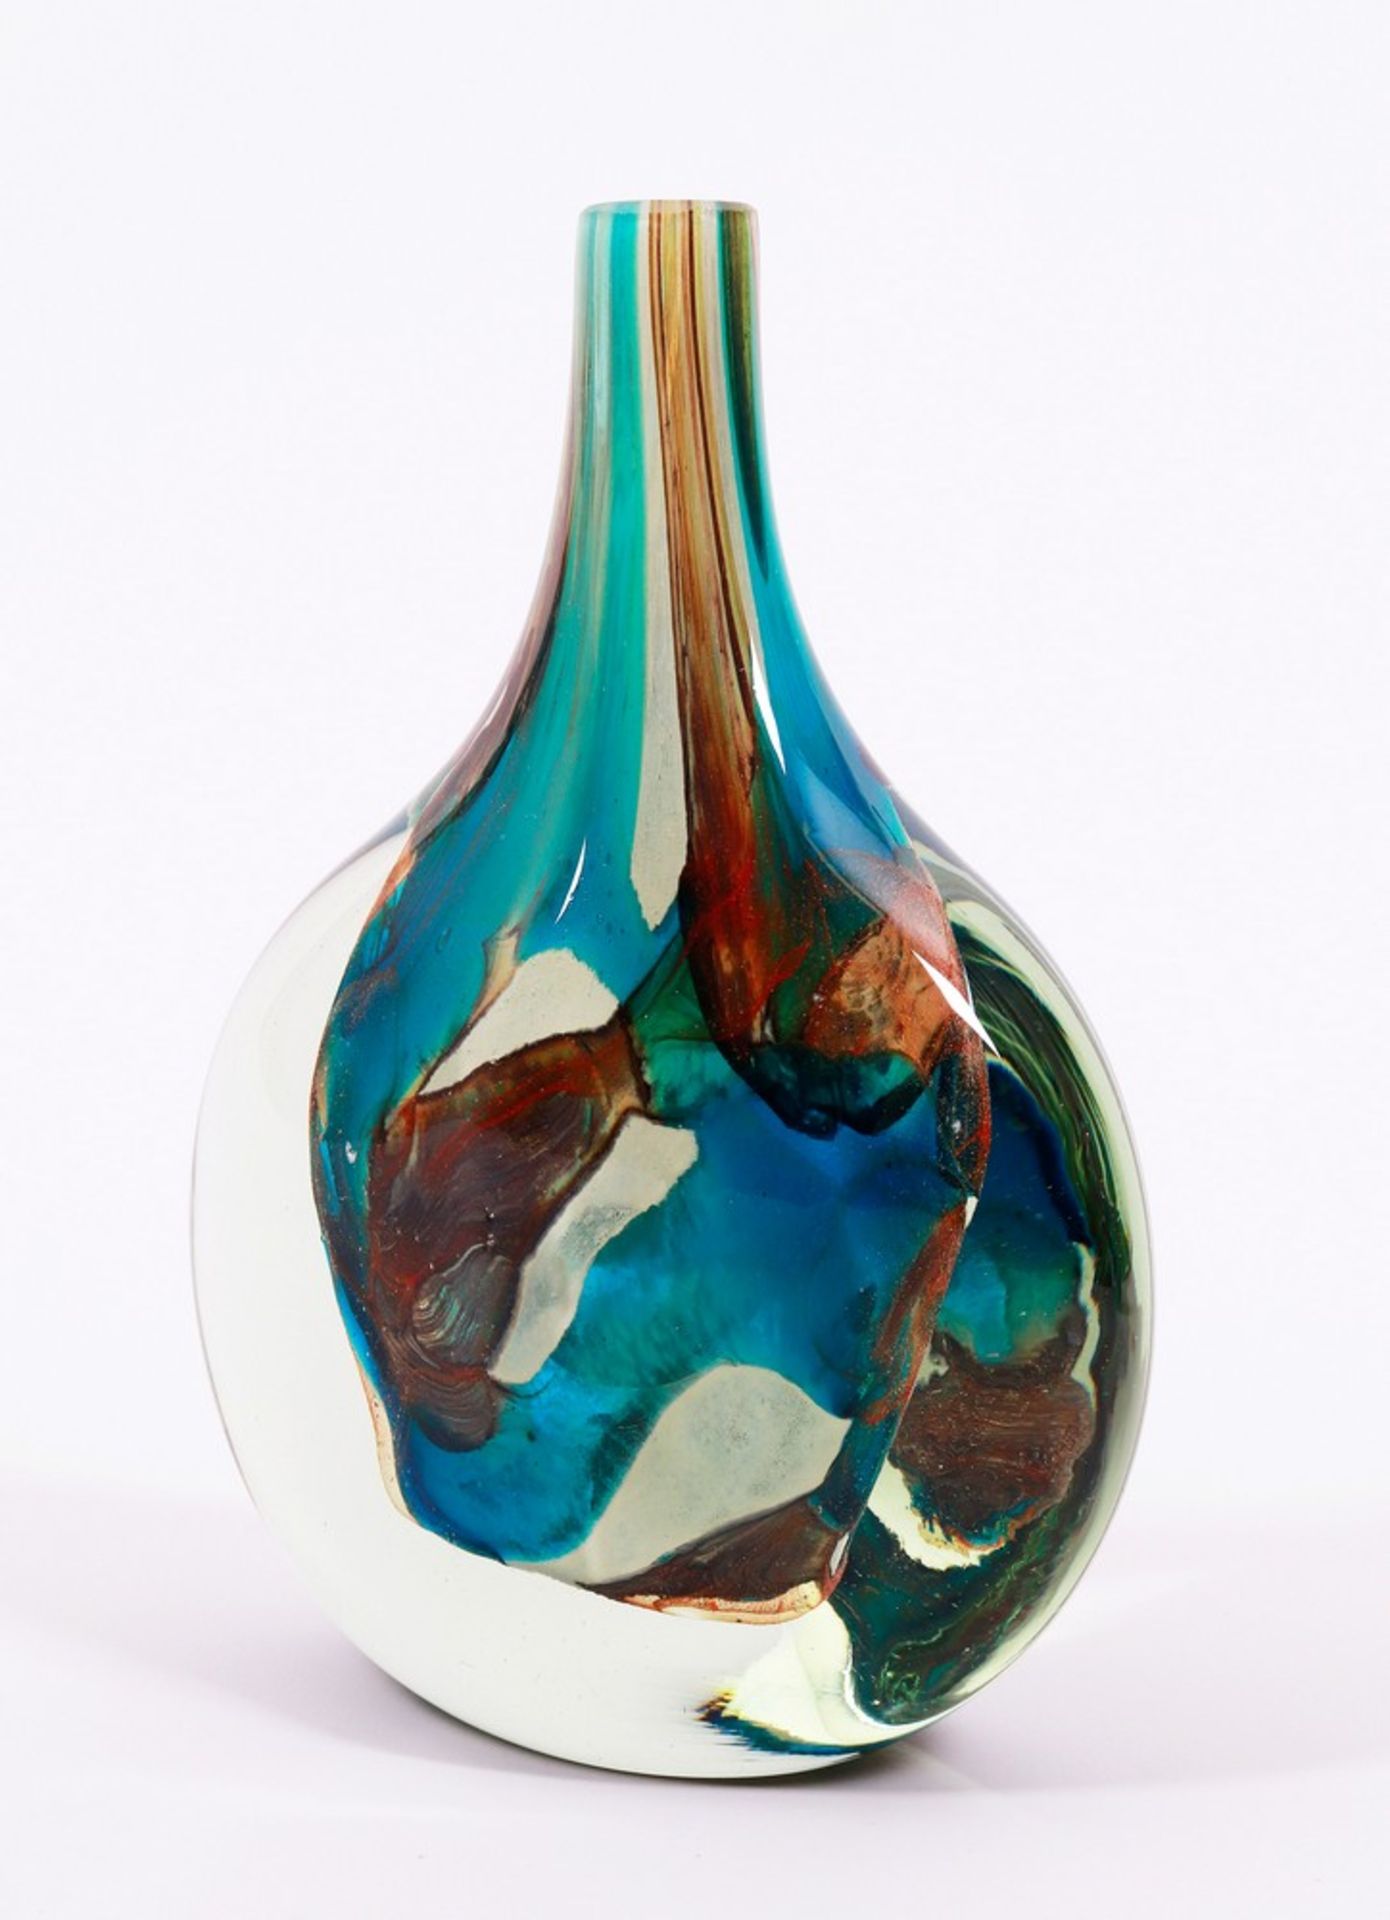 Studio glass vase, design Michael Harris, manufactured by Mdina, Malta, 1980s - Image 3 of 5